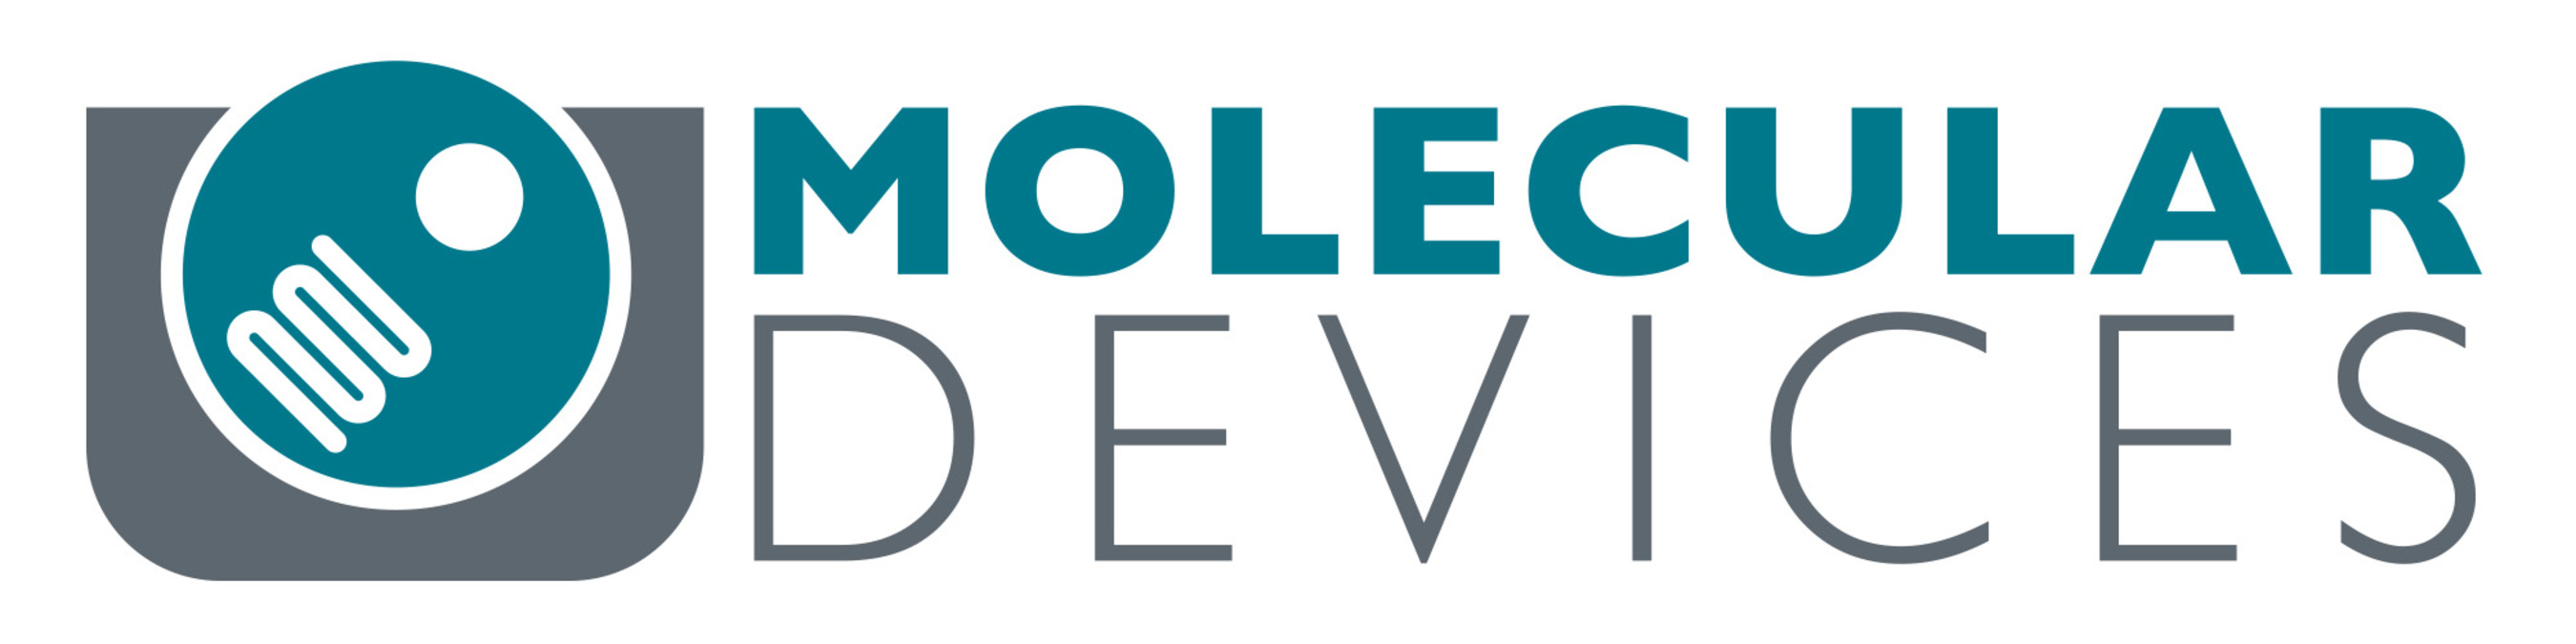 Molecular Devices, Inc. logo. (PRNewsFoto/Molecular Devices, Inc.) (PRNewsFoto/)